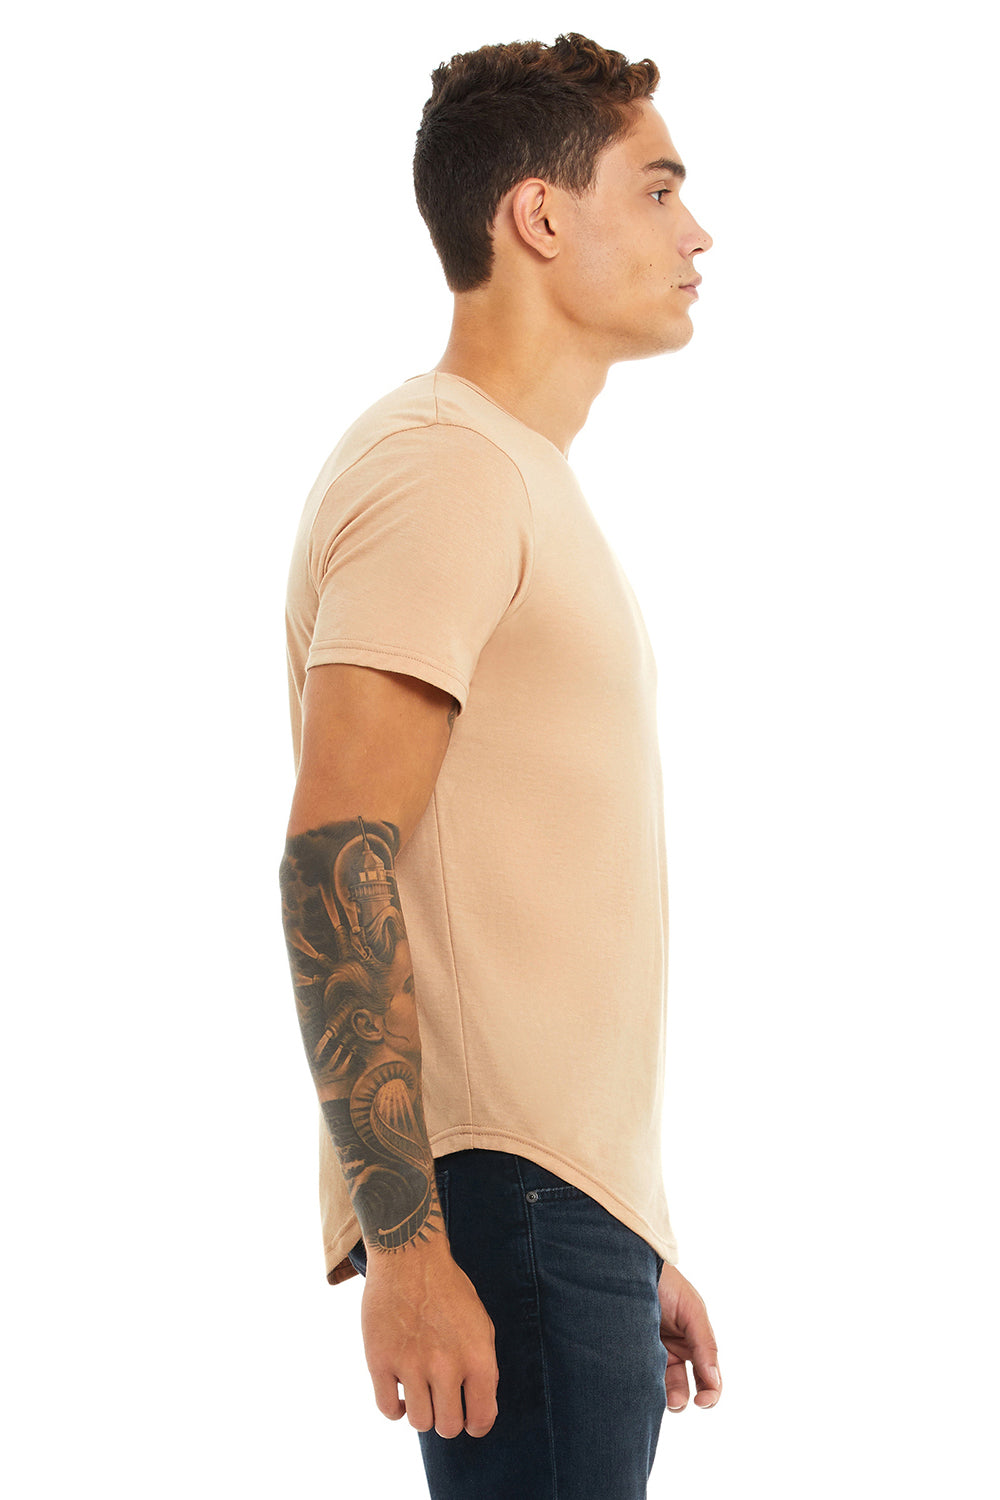 Bella + Canvas 3003C Mens Curved Hem Short Sleeve Crewneck T-Shirt Heather Sand Dune Model Side